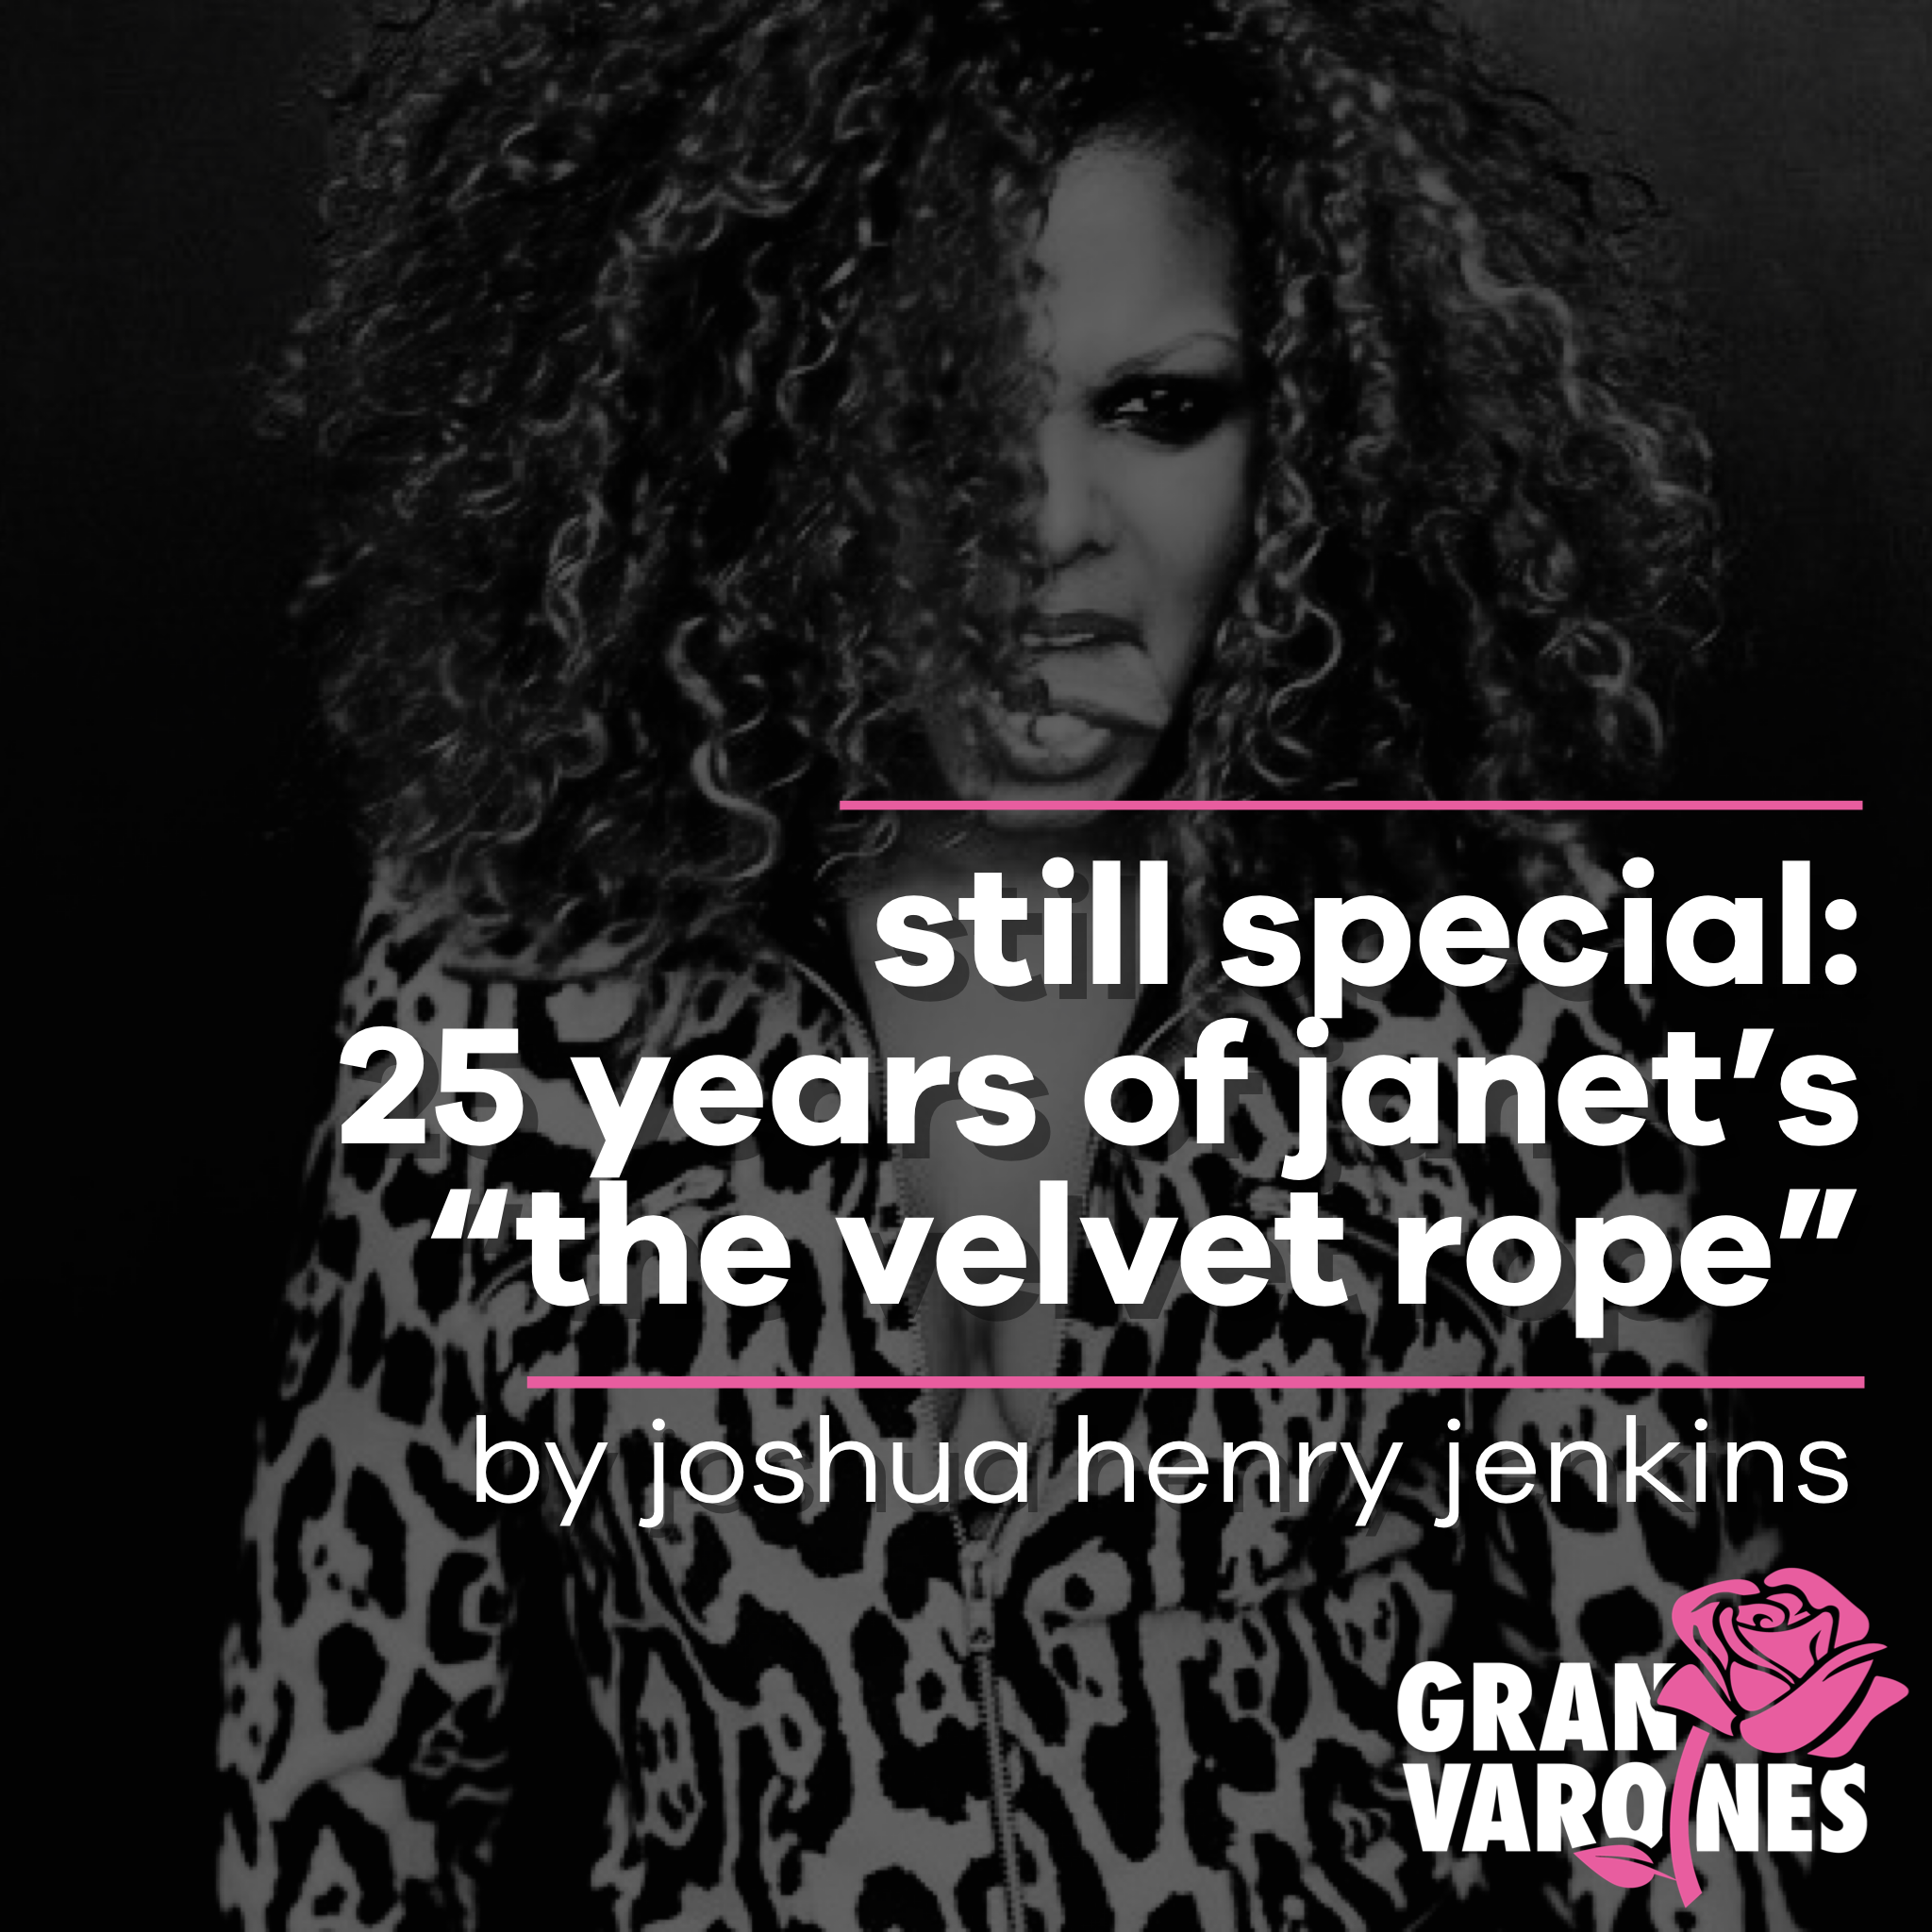 Still Special: 25 Years of “The Velvet Rope”